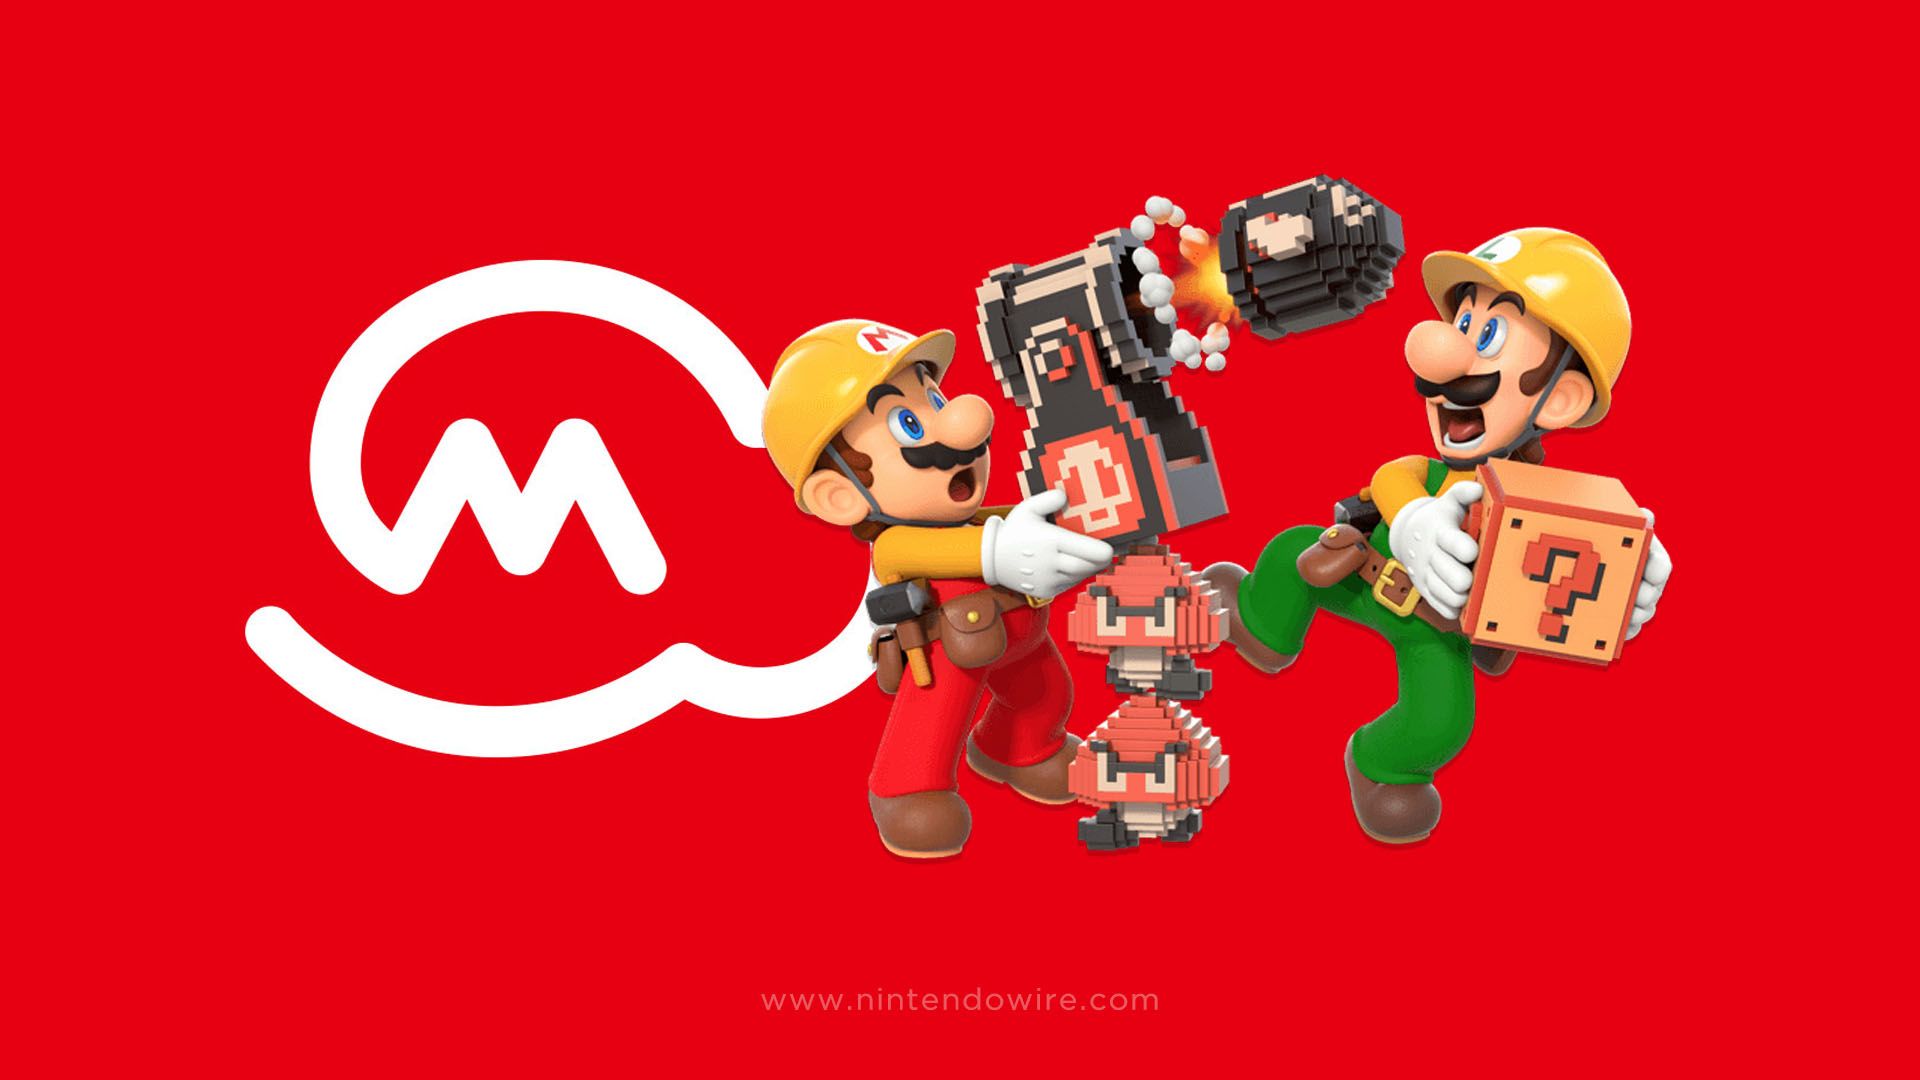 Super Mario Maker 2 and Marvel Ultimate Alliance 3 have assembled